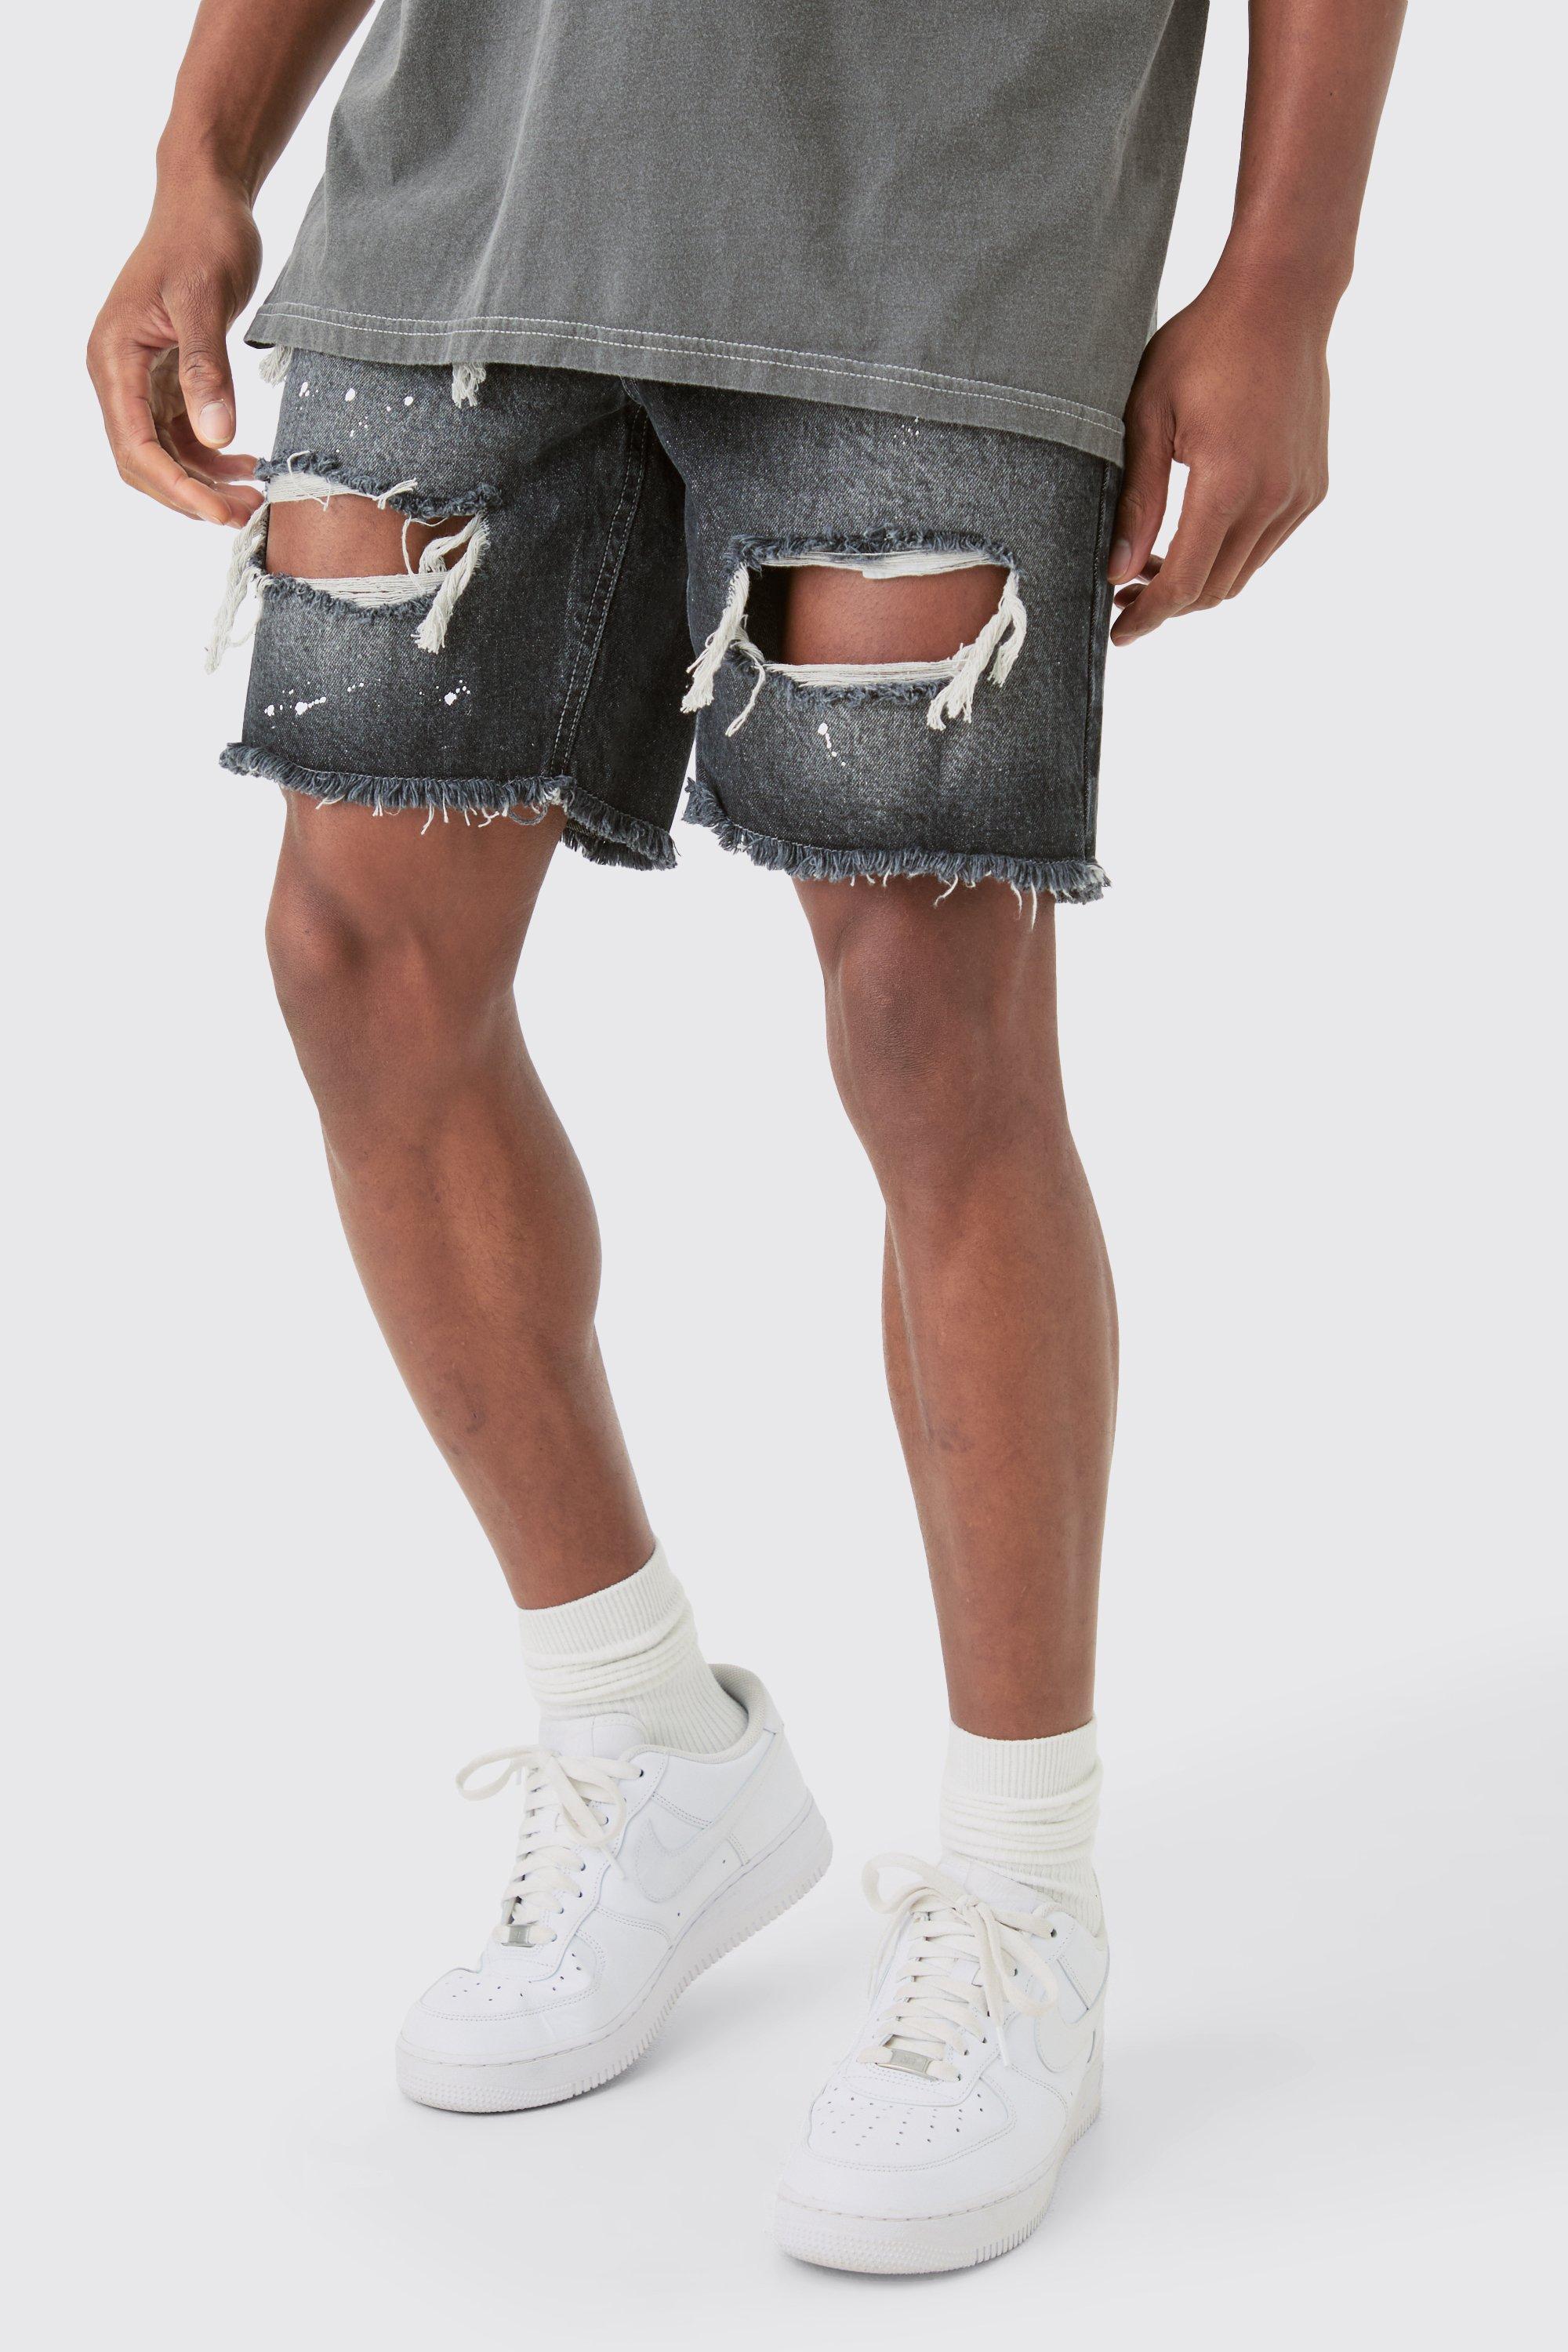 Image of Slim Rigid Ripped Paint Splatter Denim Shorts In Grey, Grigio